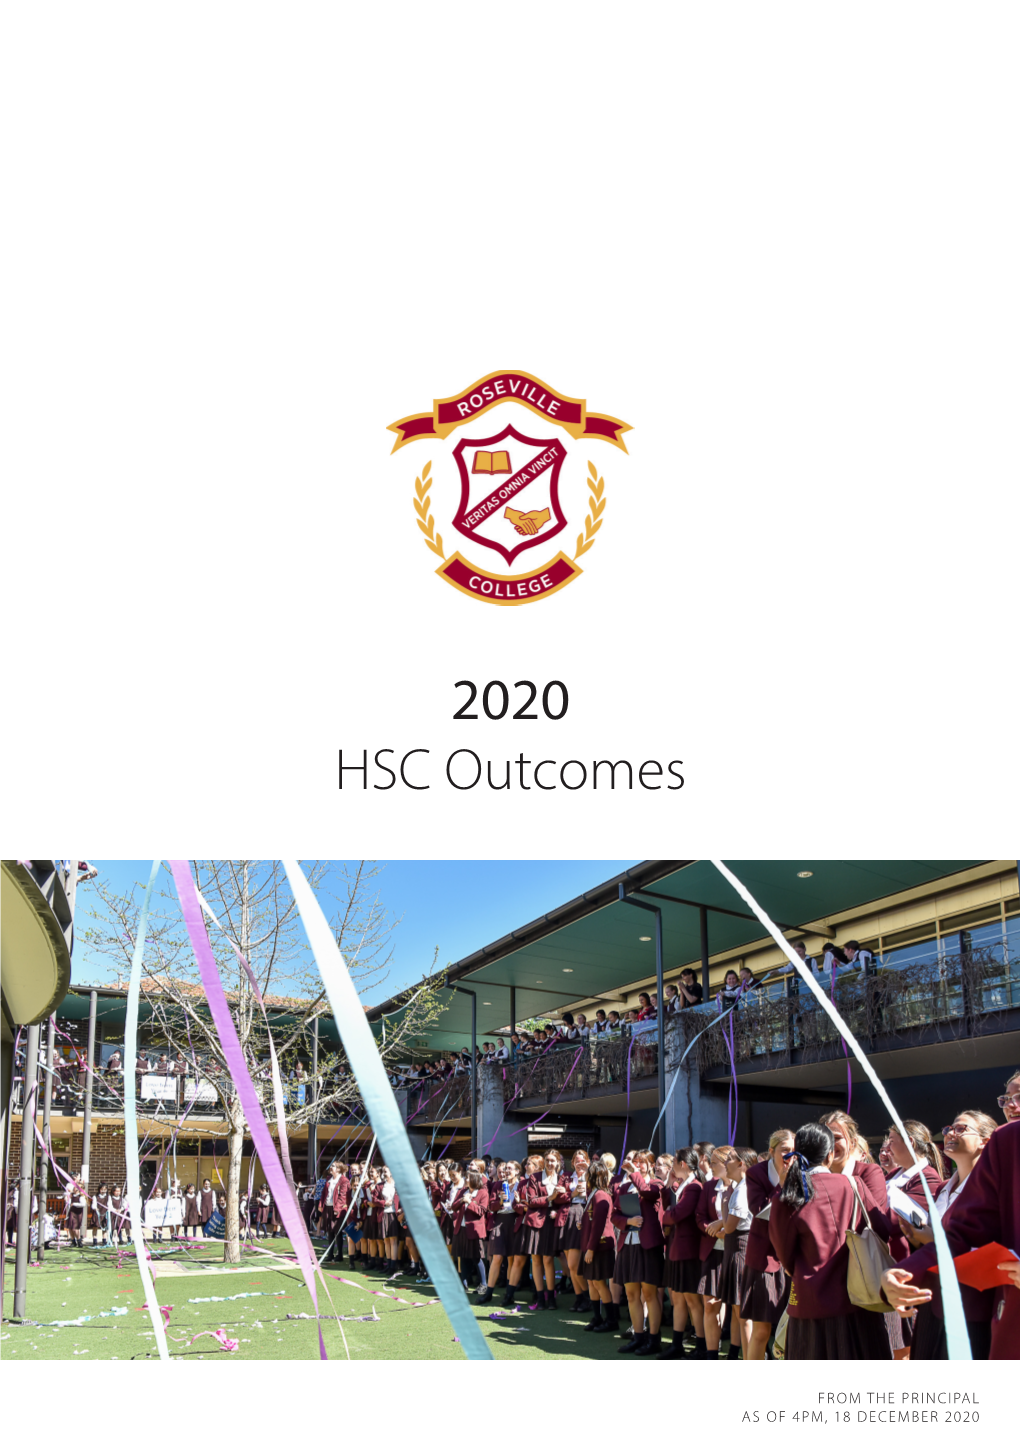 HSC Outcomes 2020